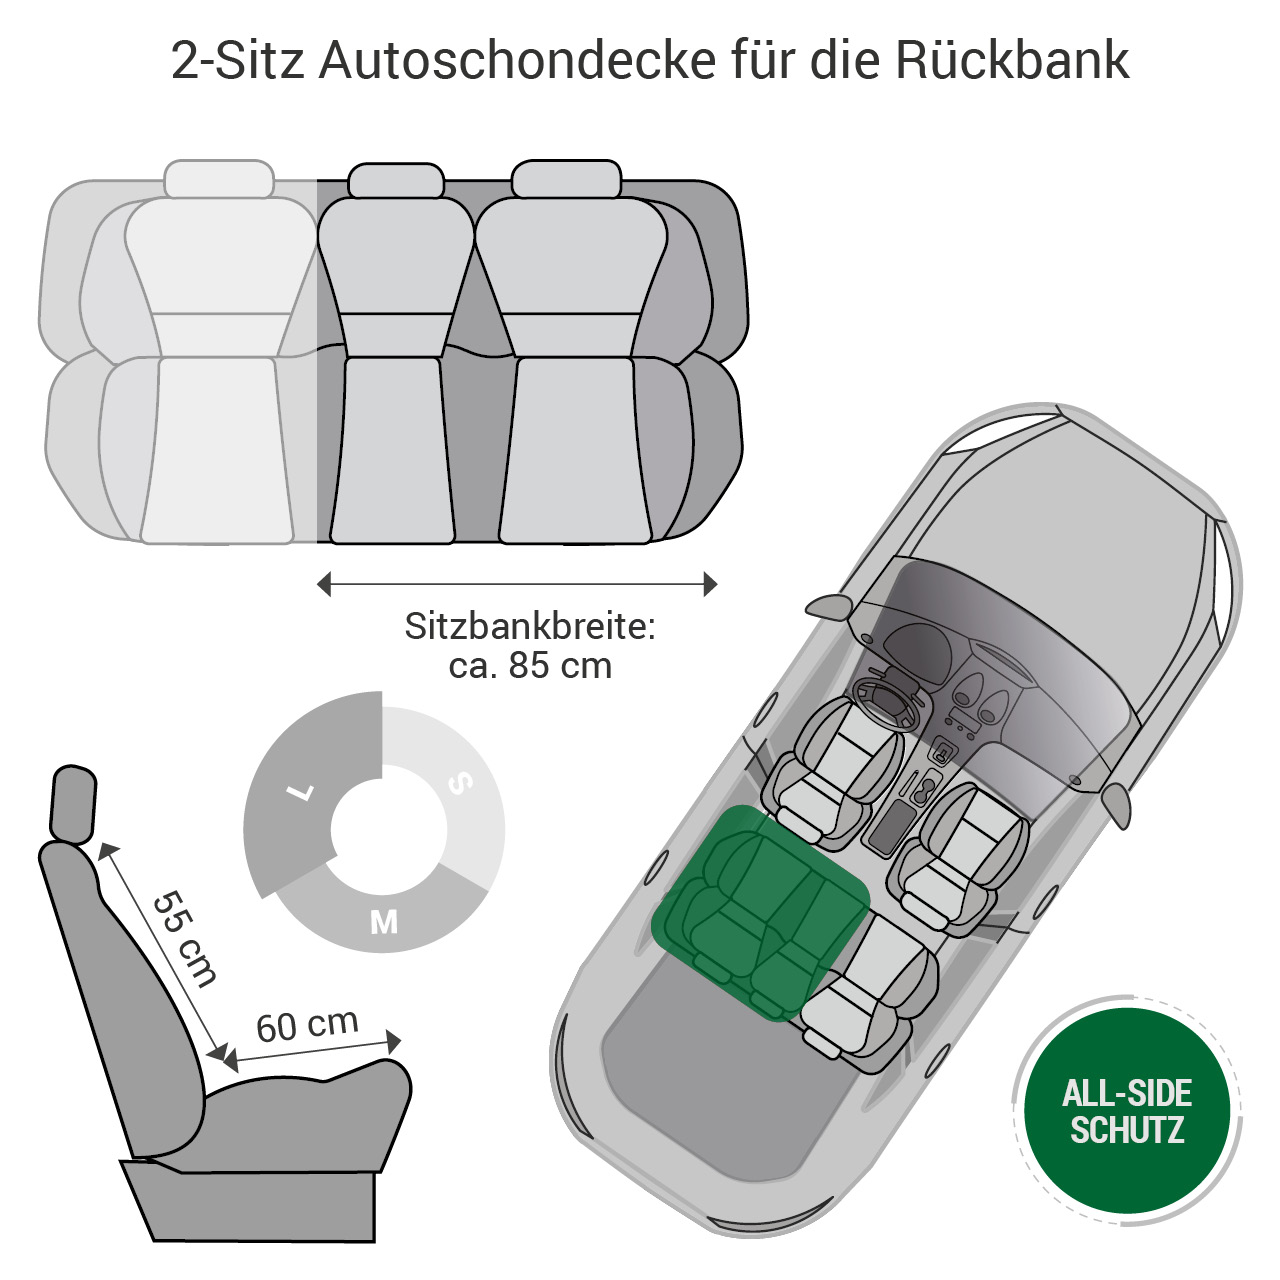 Doctor Bark - Autoschondecke für Hunde - Rückbank 2-Sitz Gr. L - grau